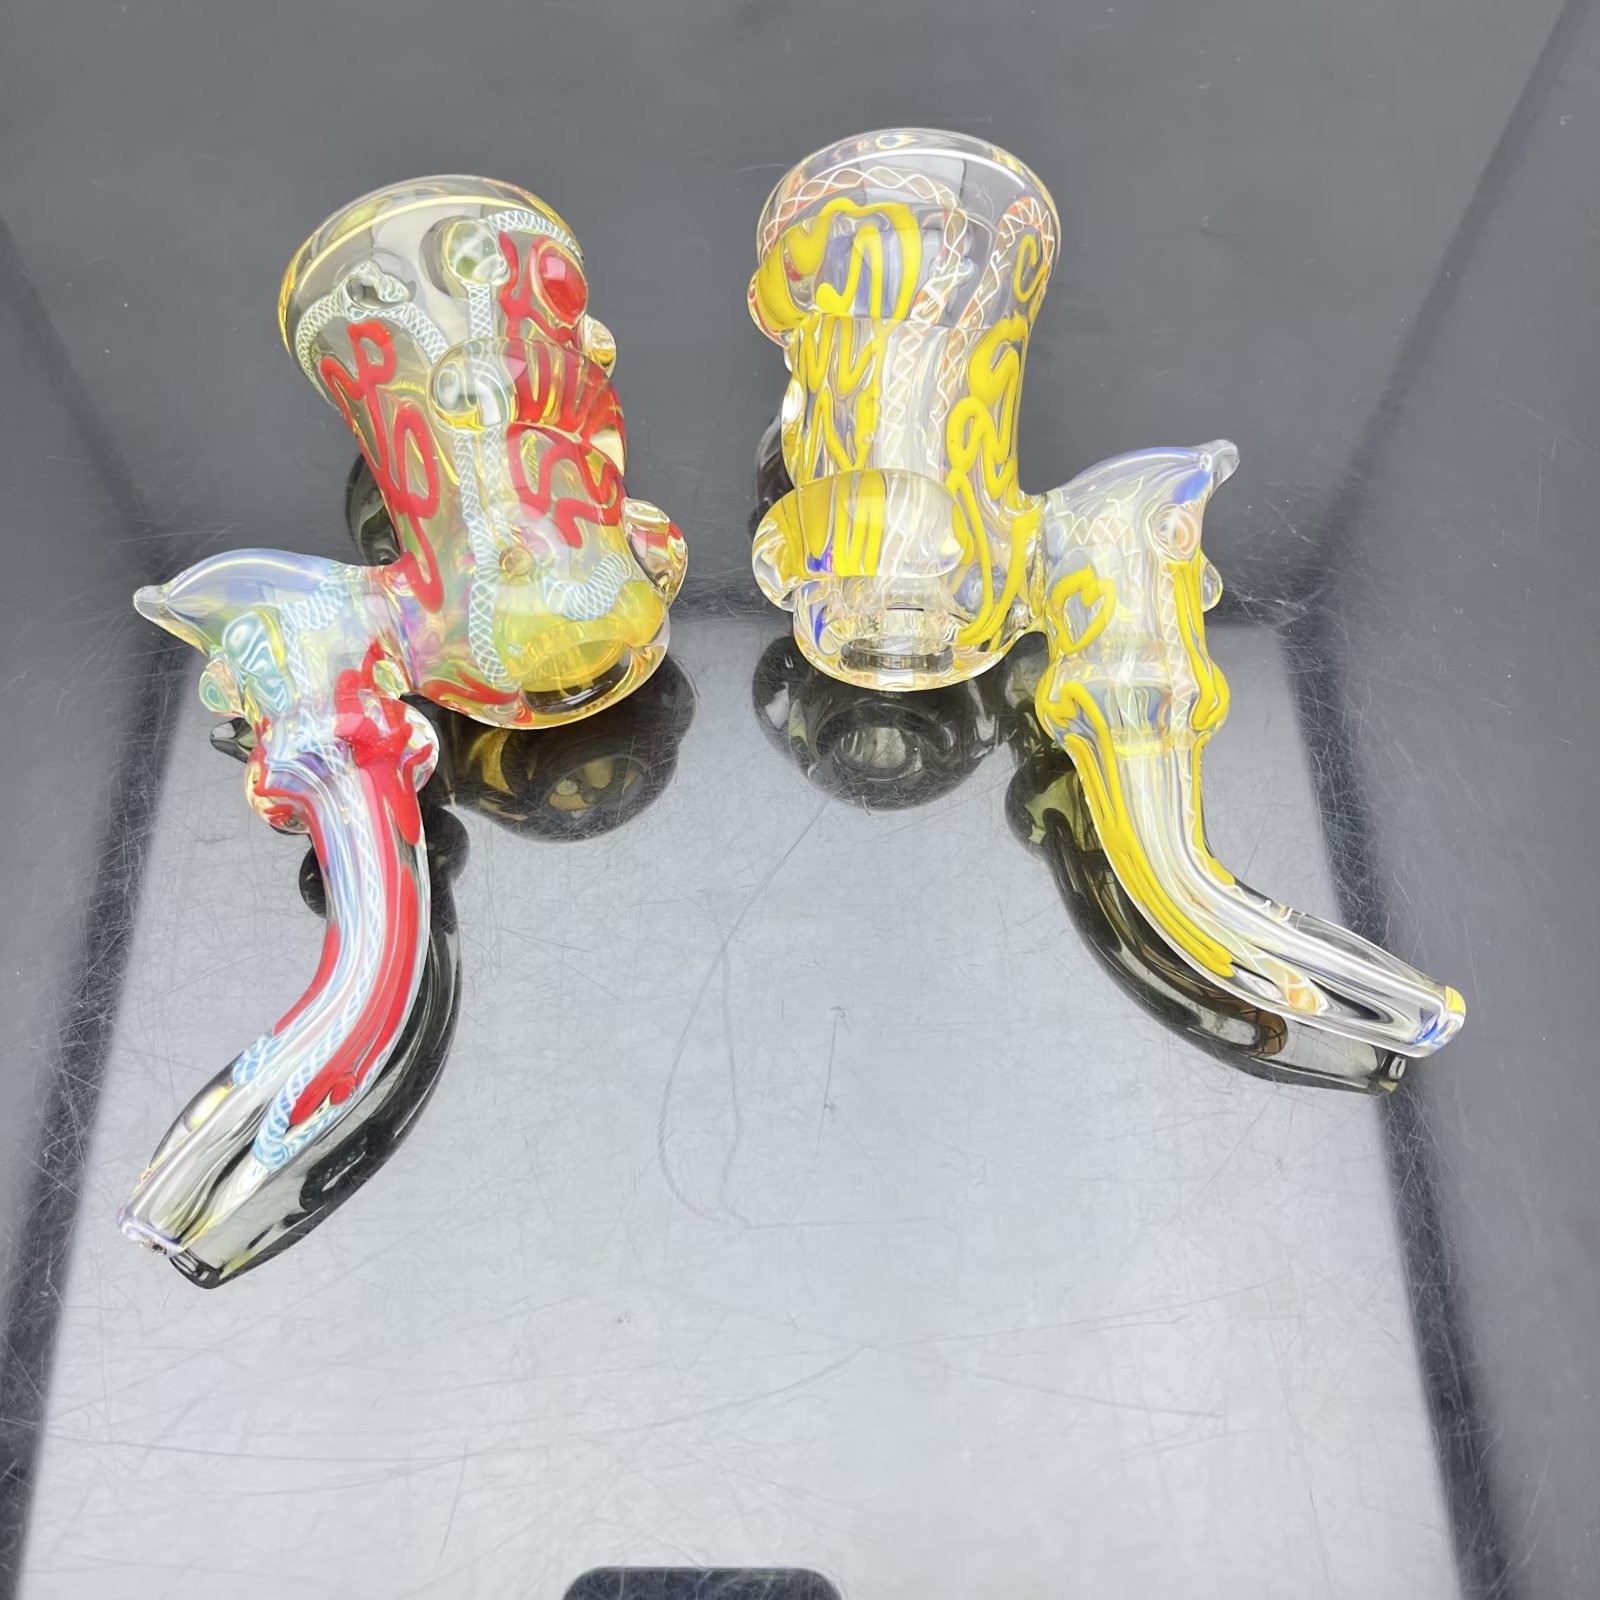 Tubos de fumaça Hookah Bong Glass Rig Oil Water Pipe Bongos de vidro coloridos clássicos engrossados e duráveis